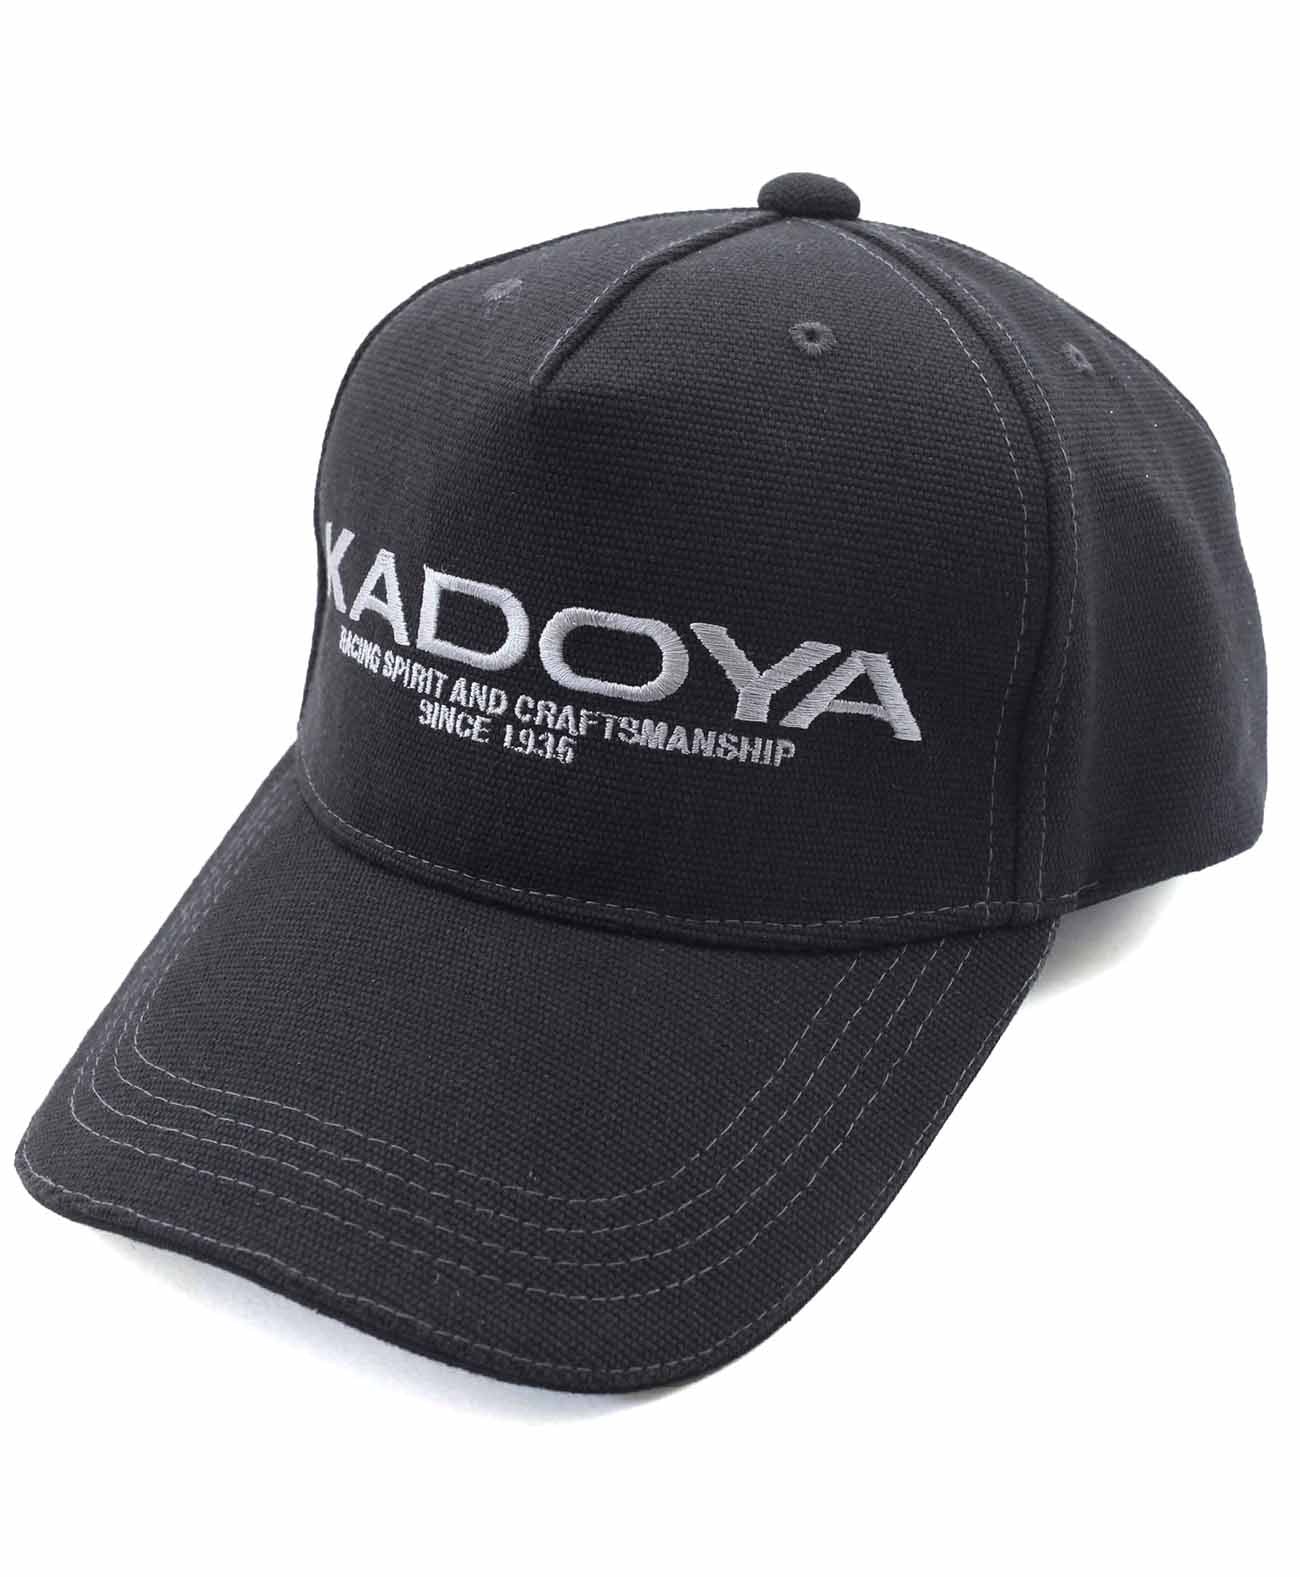 Kadoya Logotipo Cap / Black / Gray